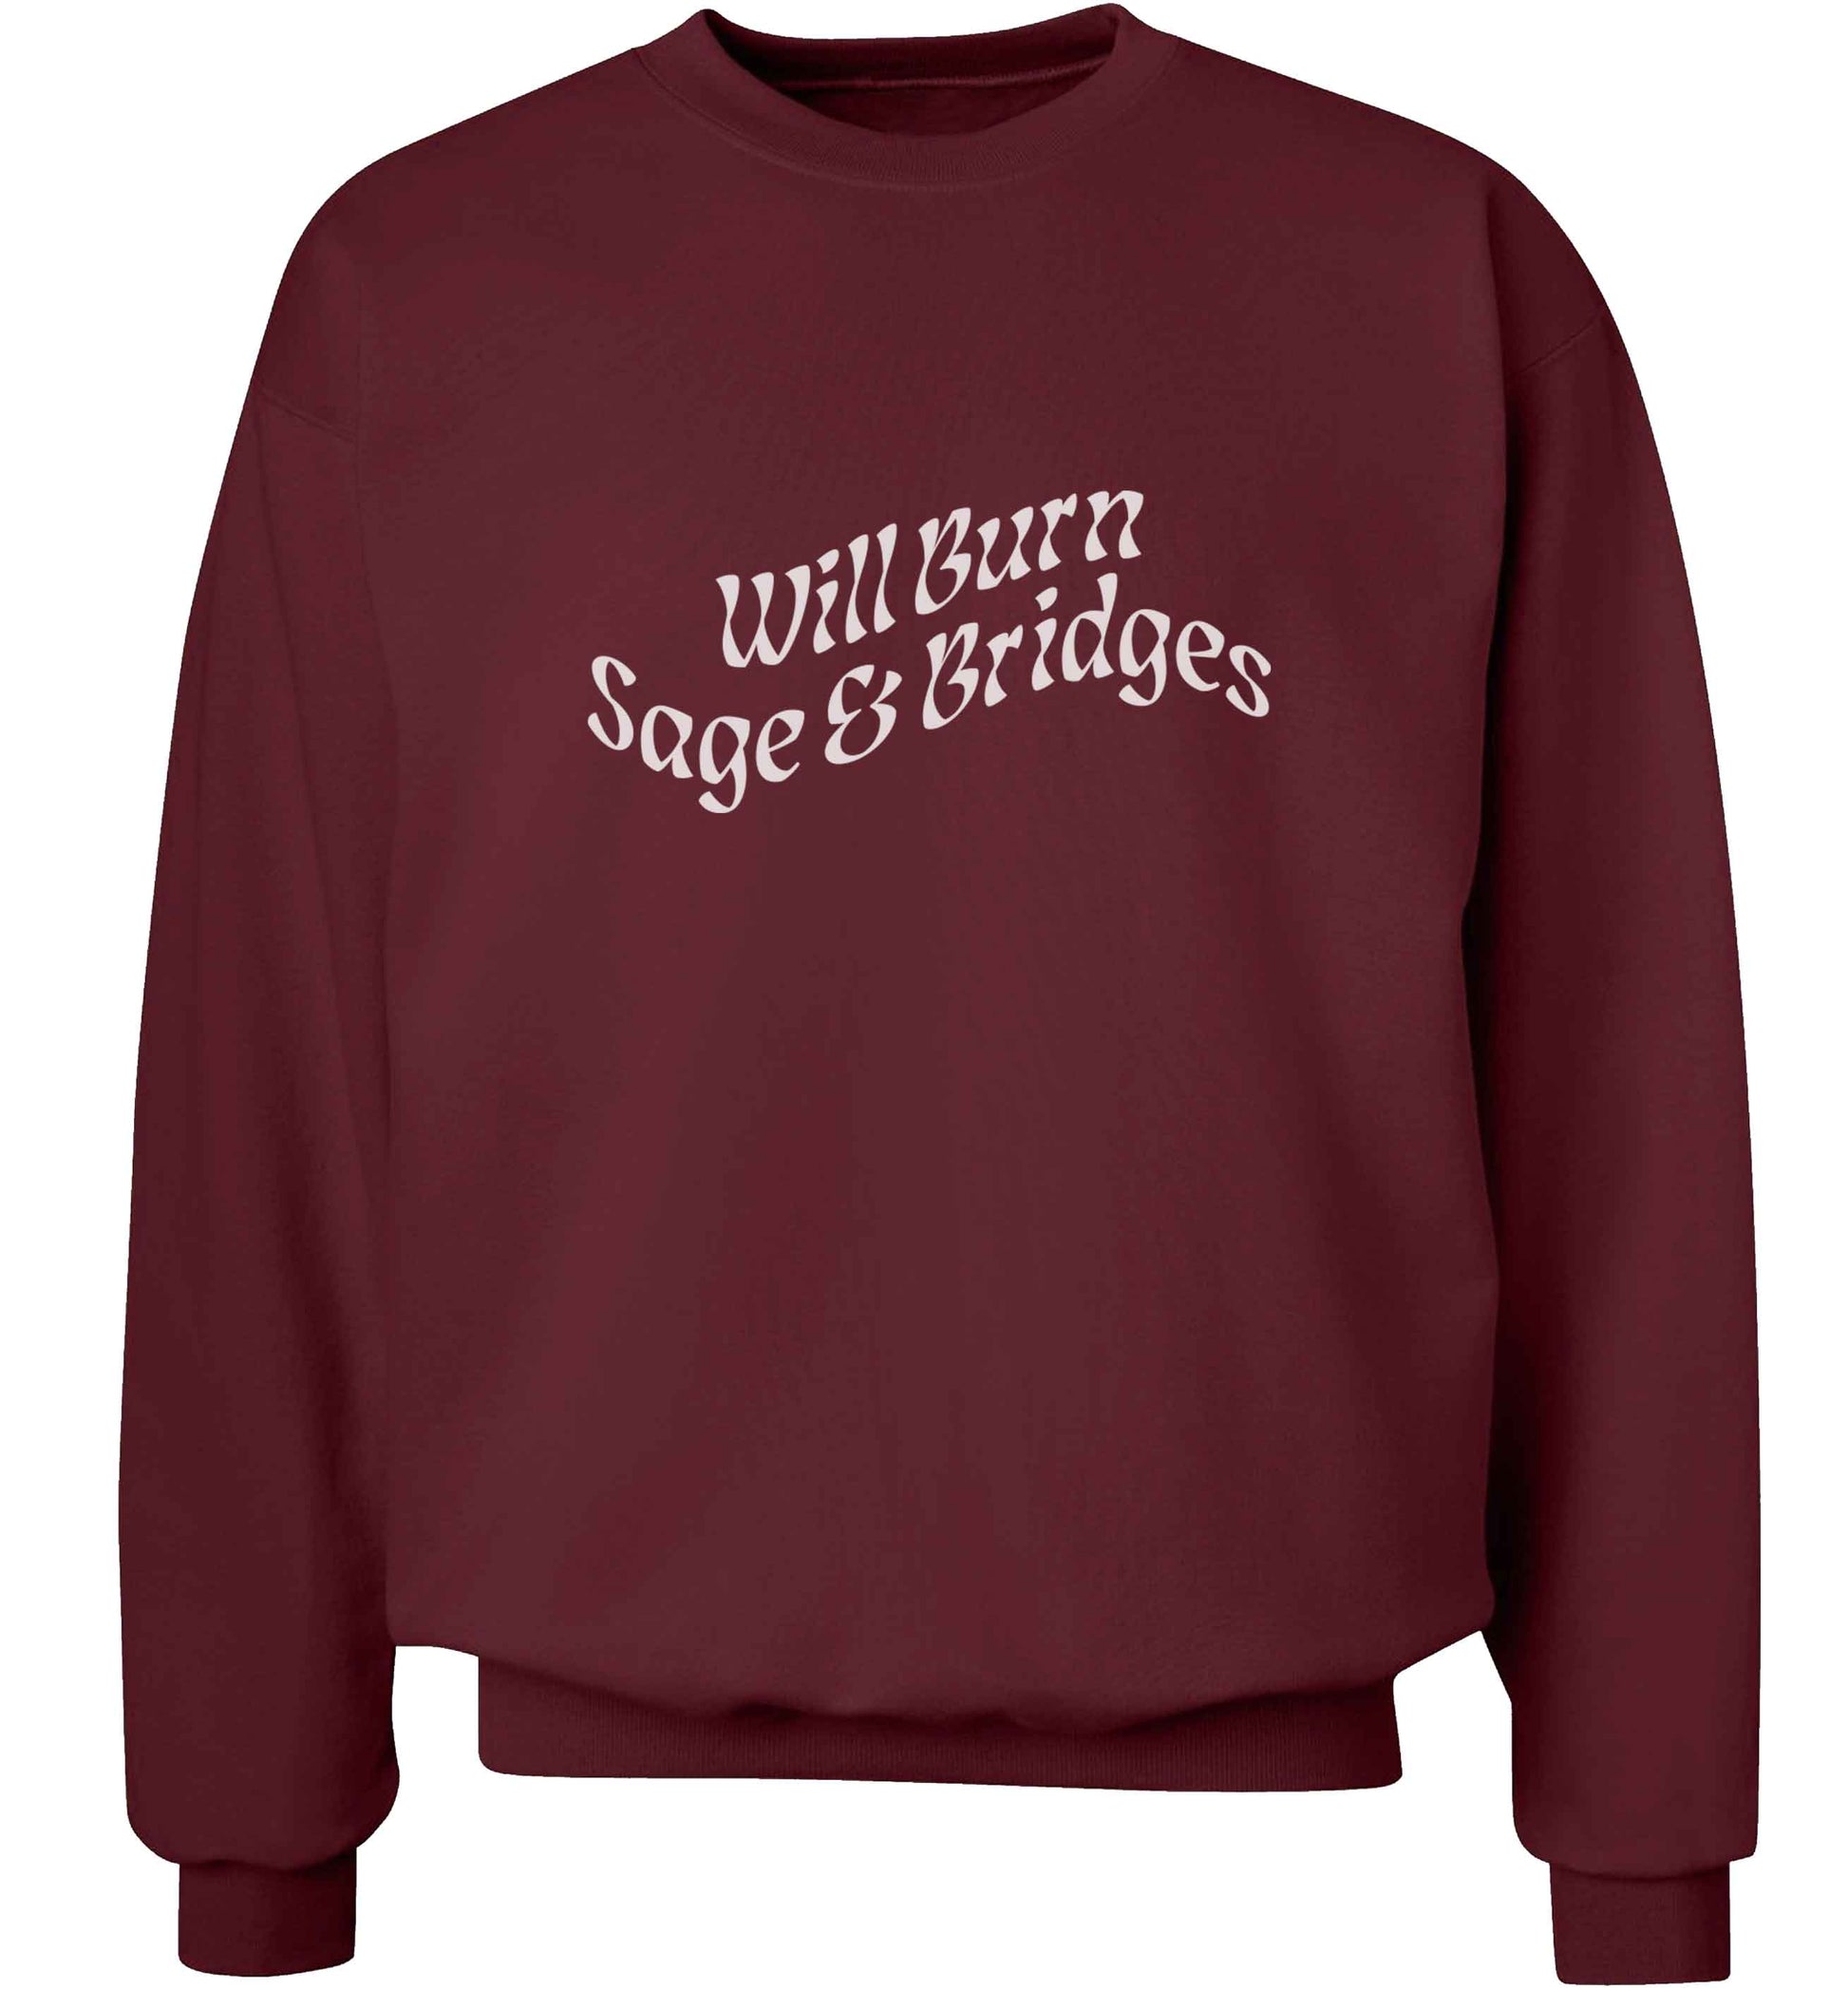 Will burn bridges and sage adult's unisex maroon sweater 2XL